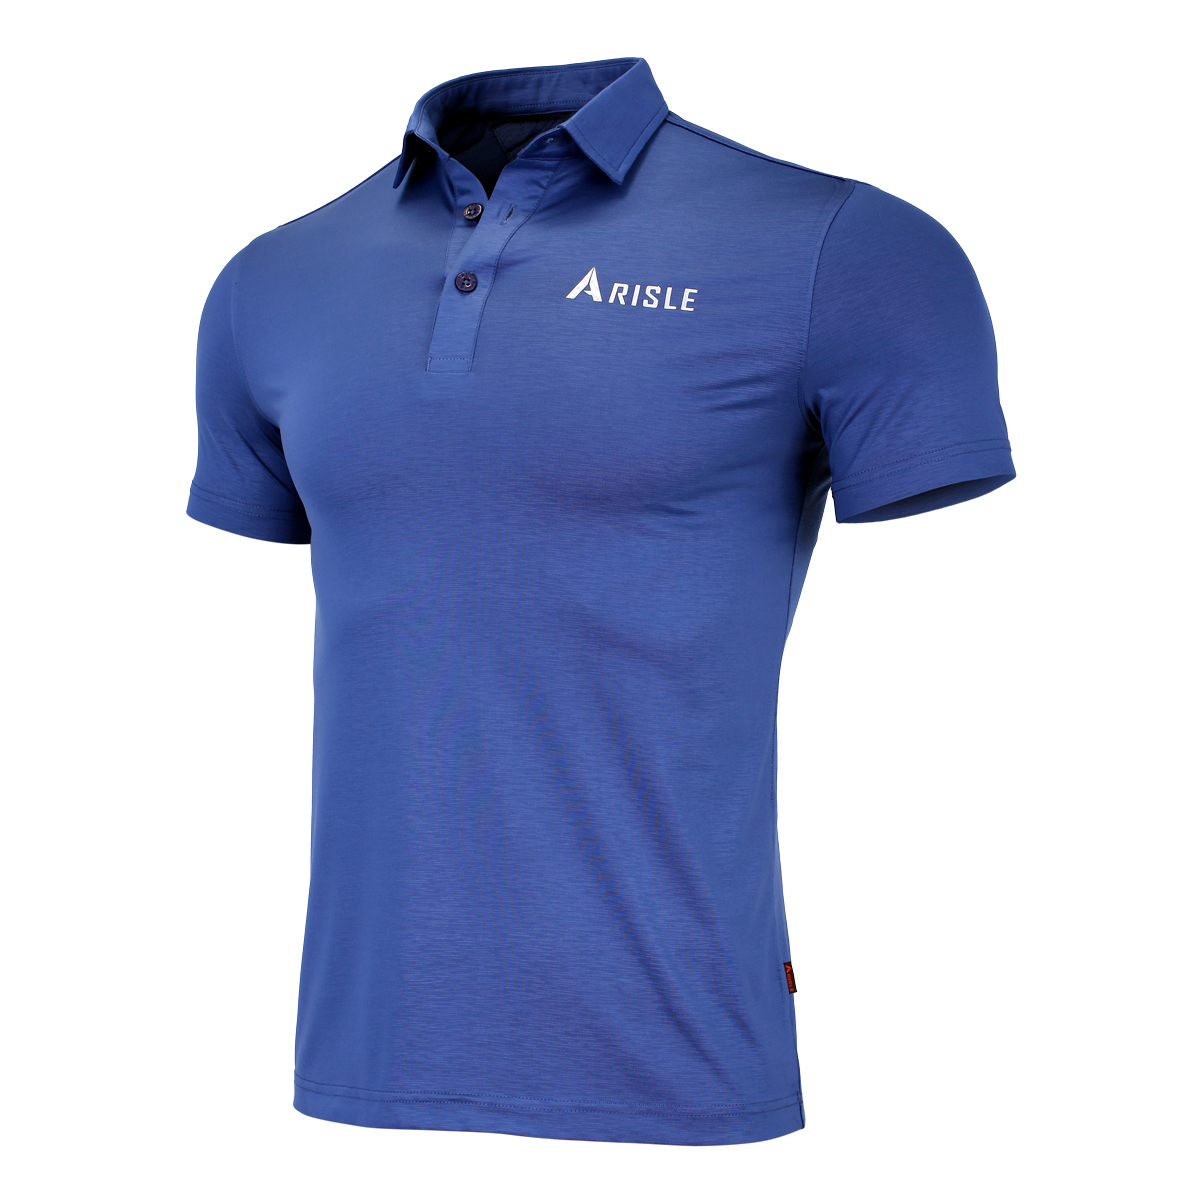 Arisle_Blue_Galaxy_Polo_Shirt_front